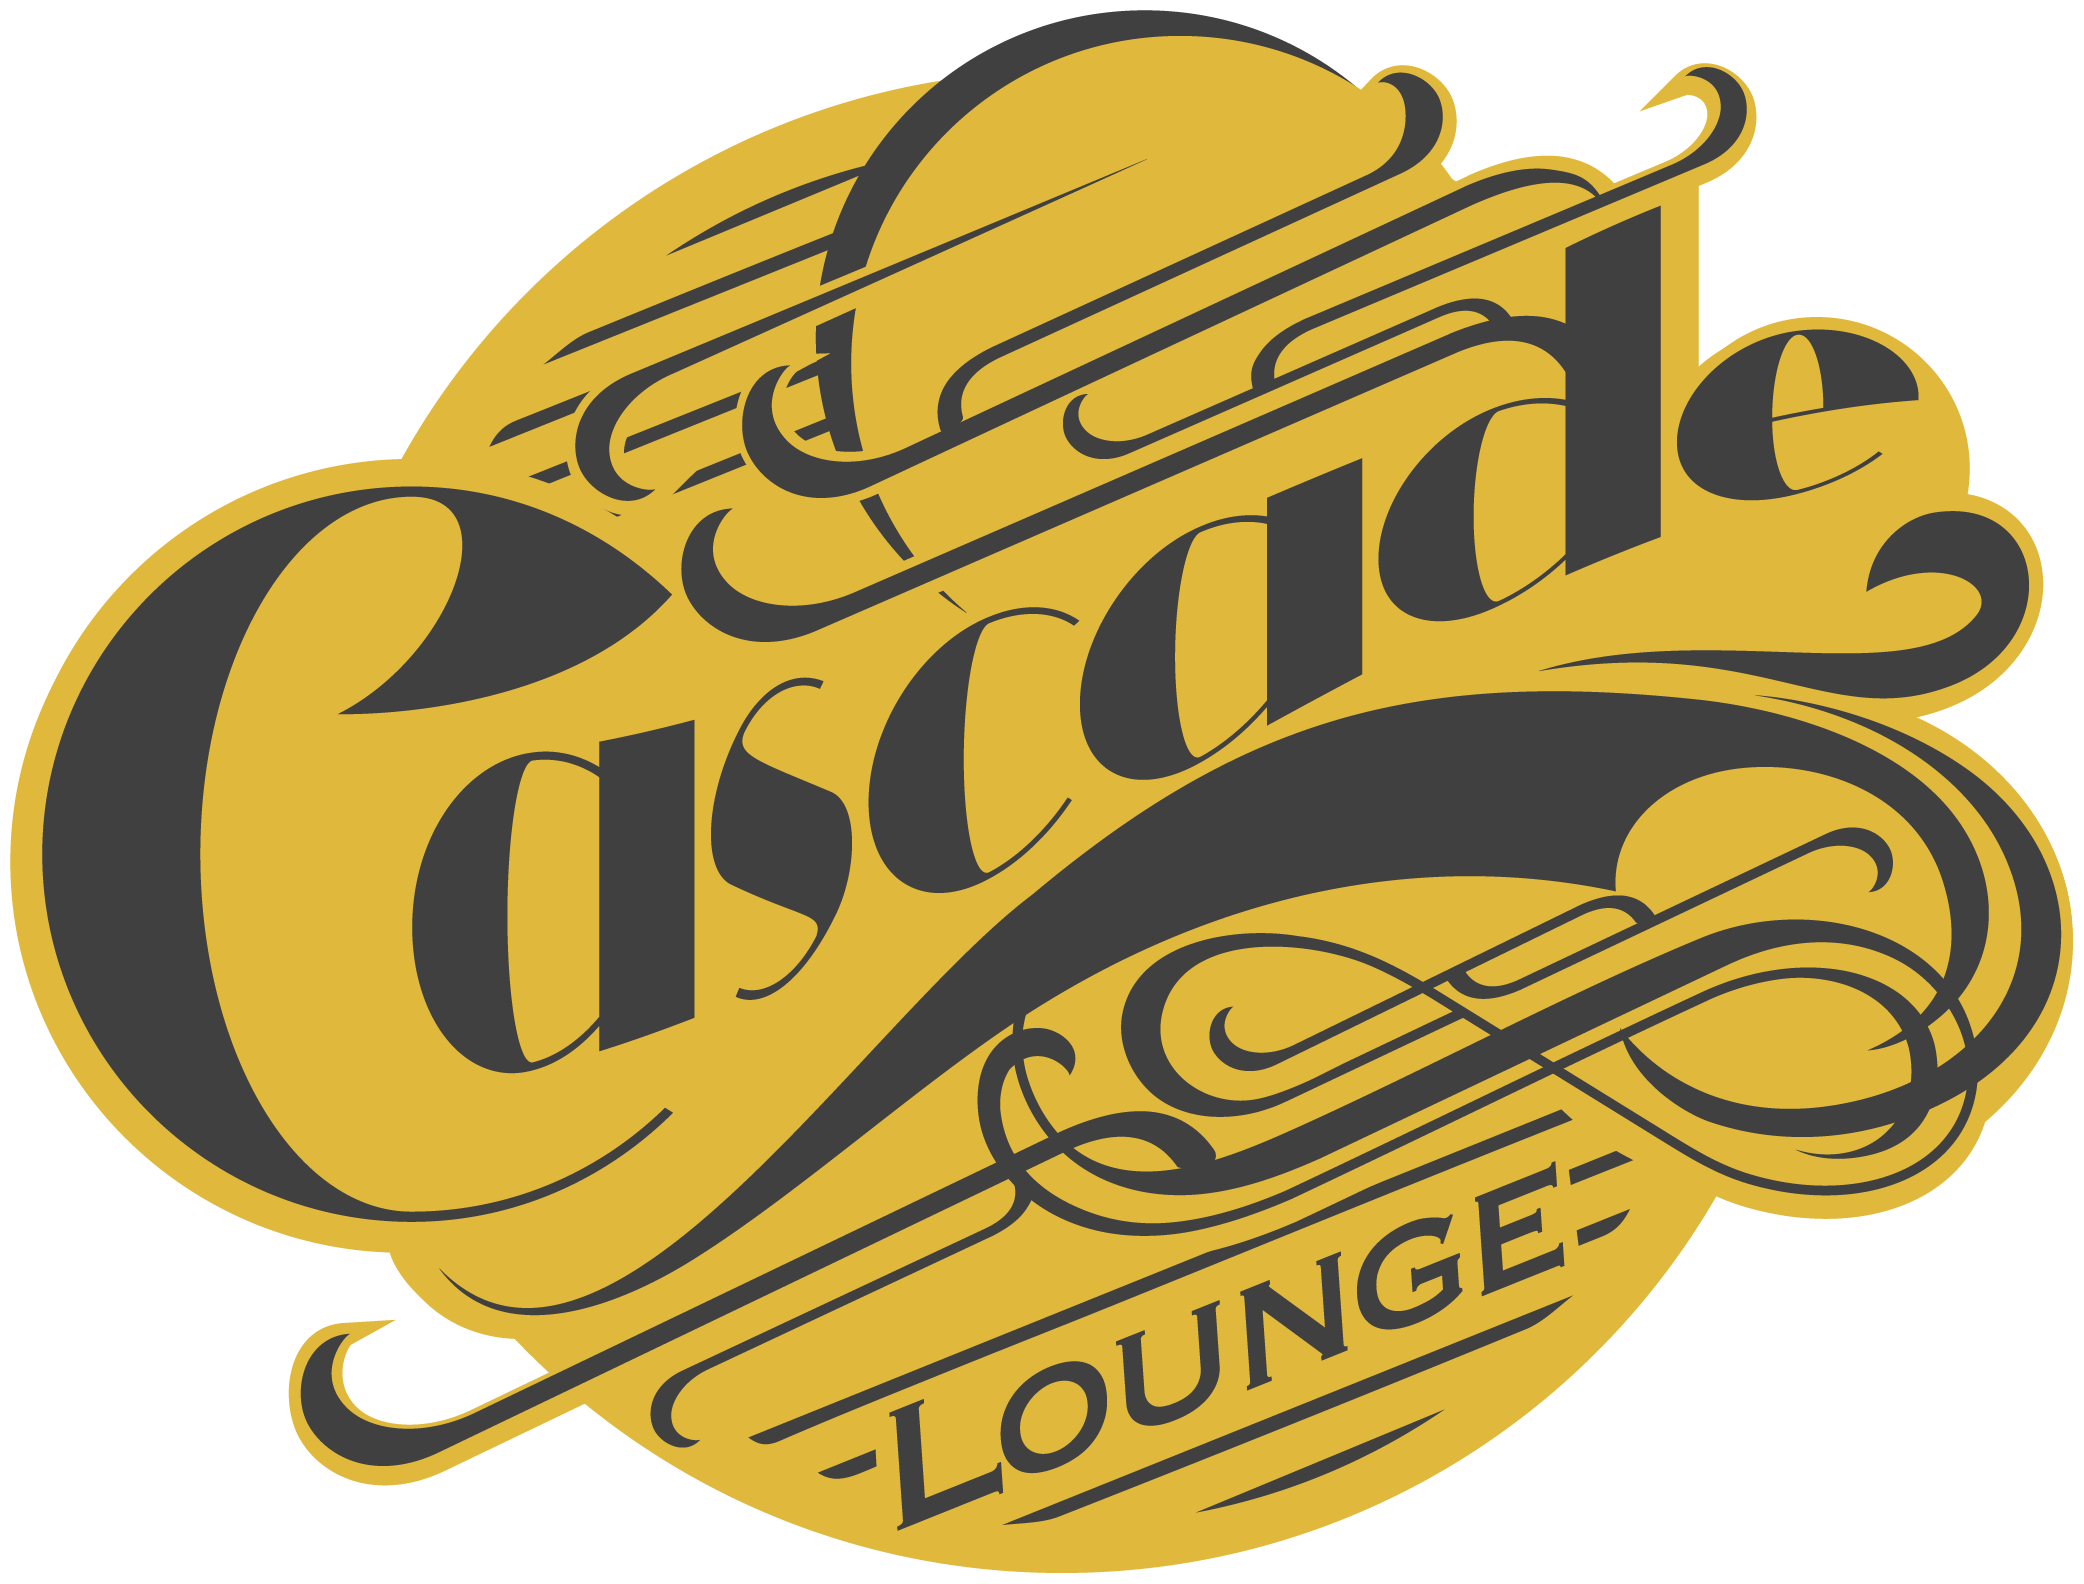 Cascade Lounge